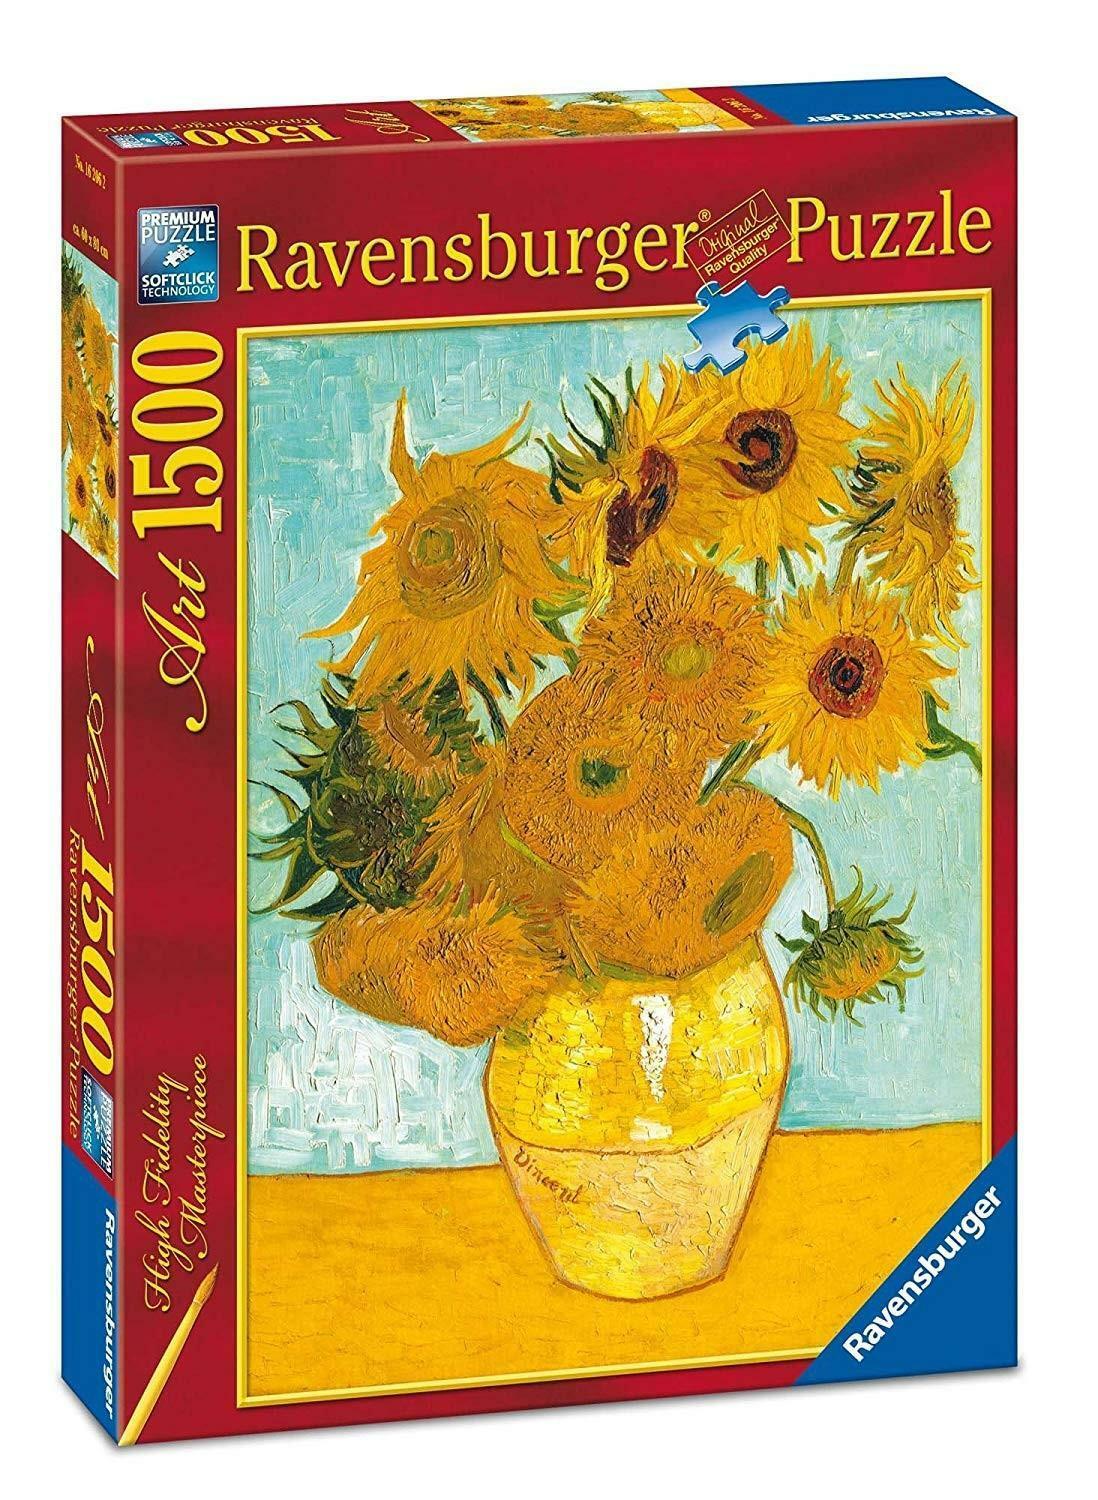 ravensburger puzzle 1500 pz vaso con girasoli